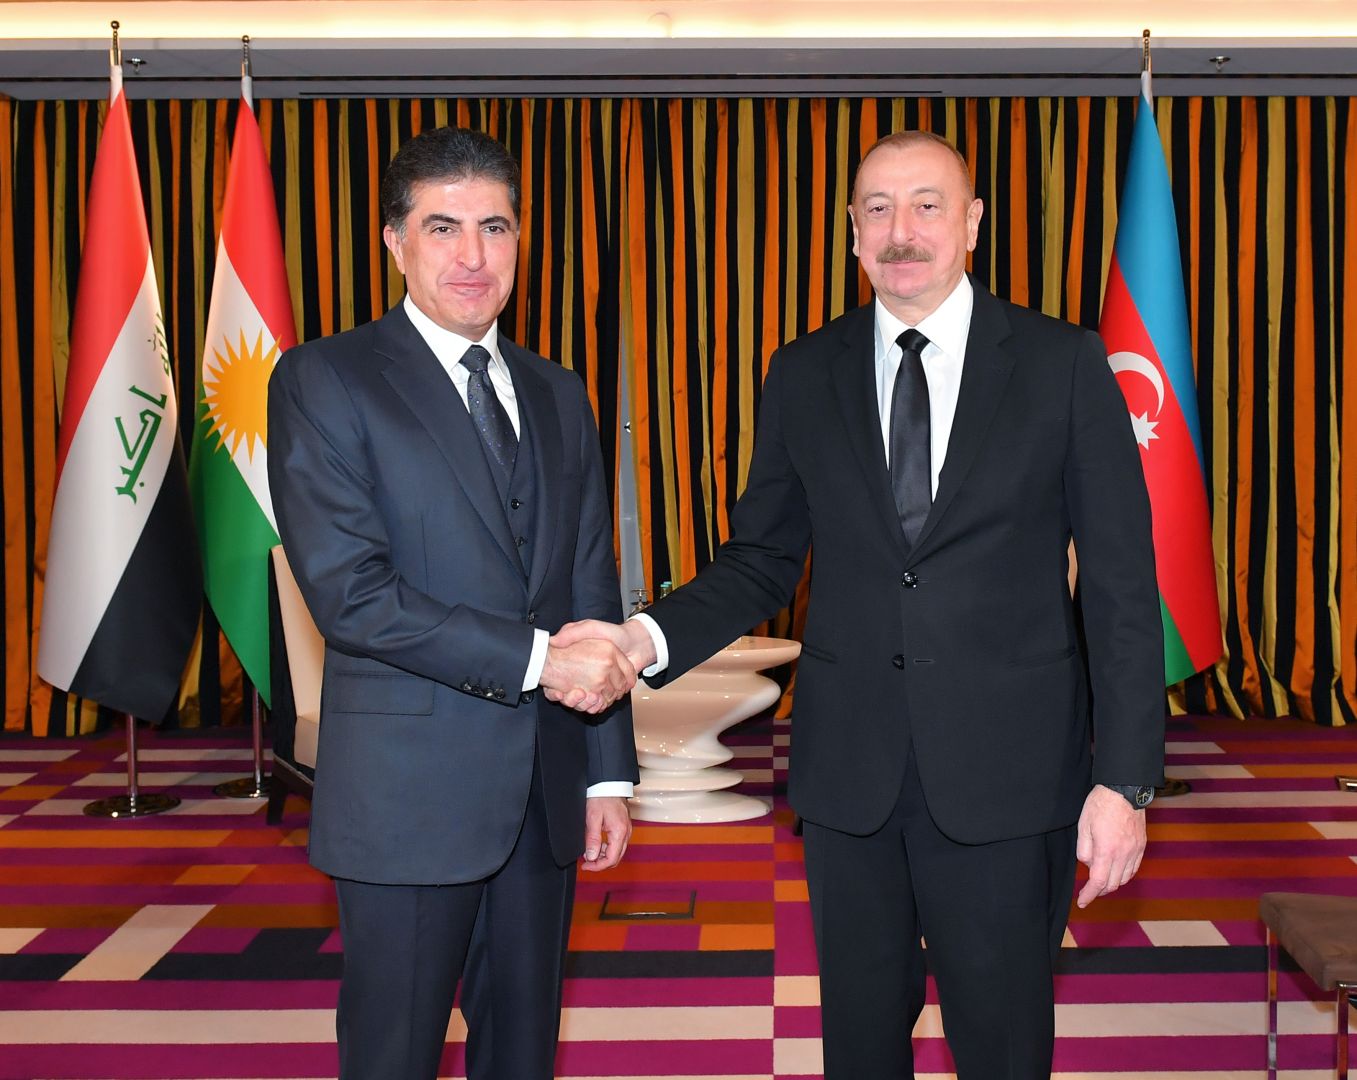 President of Azerbaijan and head of Iraqi Kurdistan meets in Munich [PHOTOS\VIDEO]